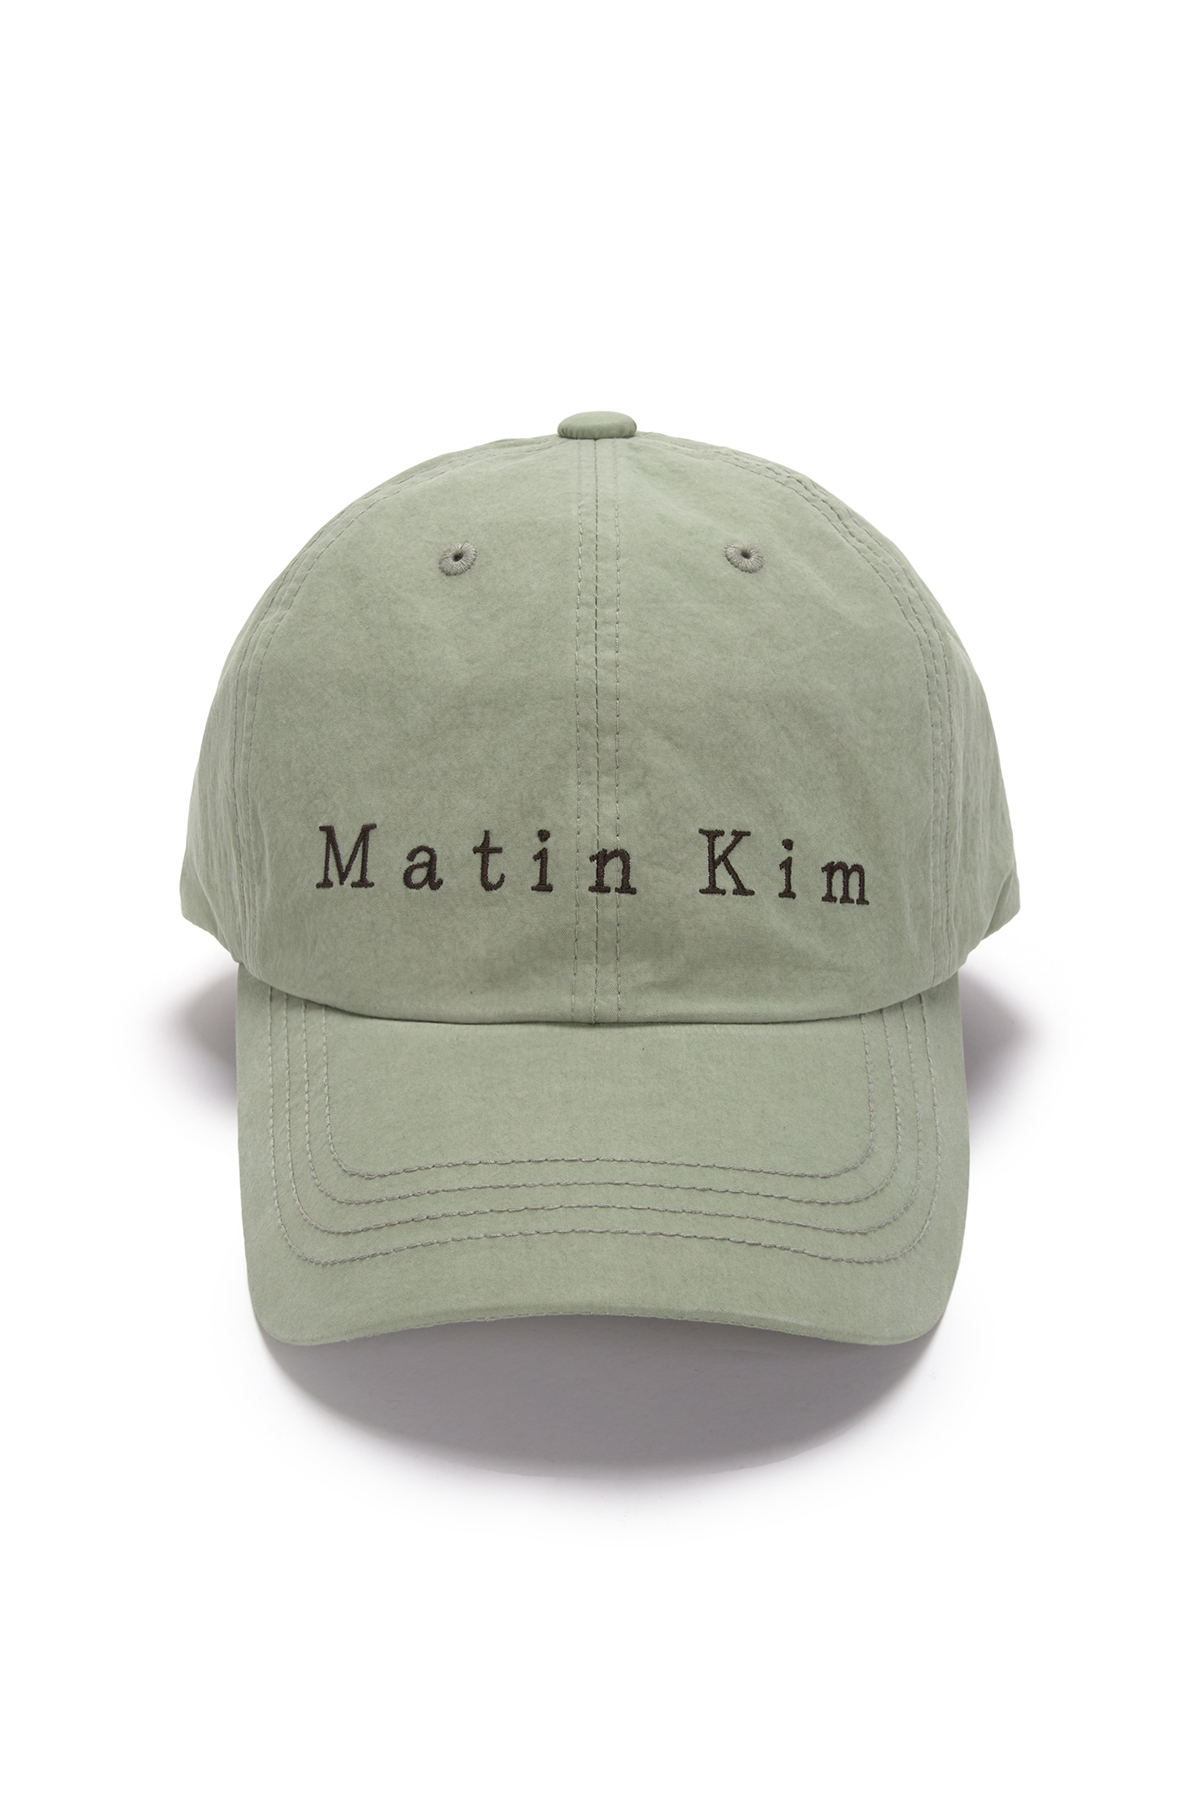 MATIN TYPO BALL CAP IN LIGHT KHAKI